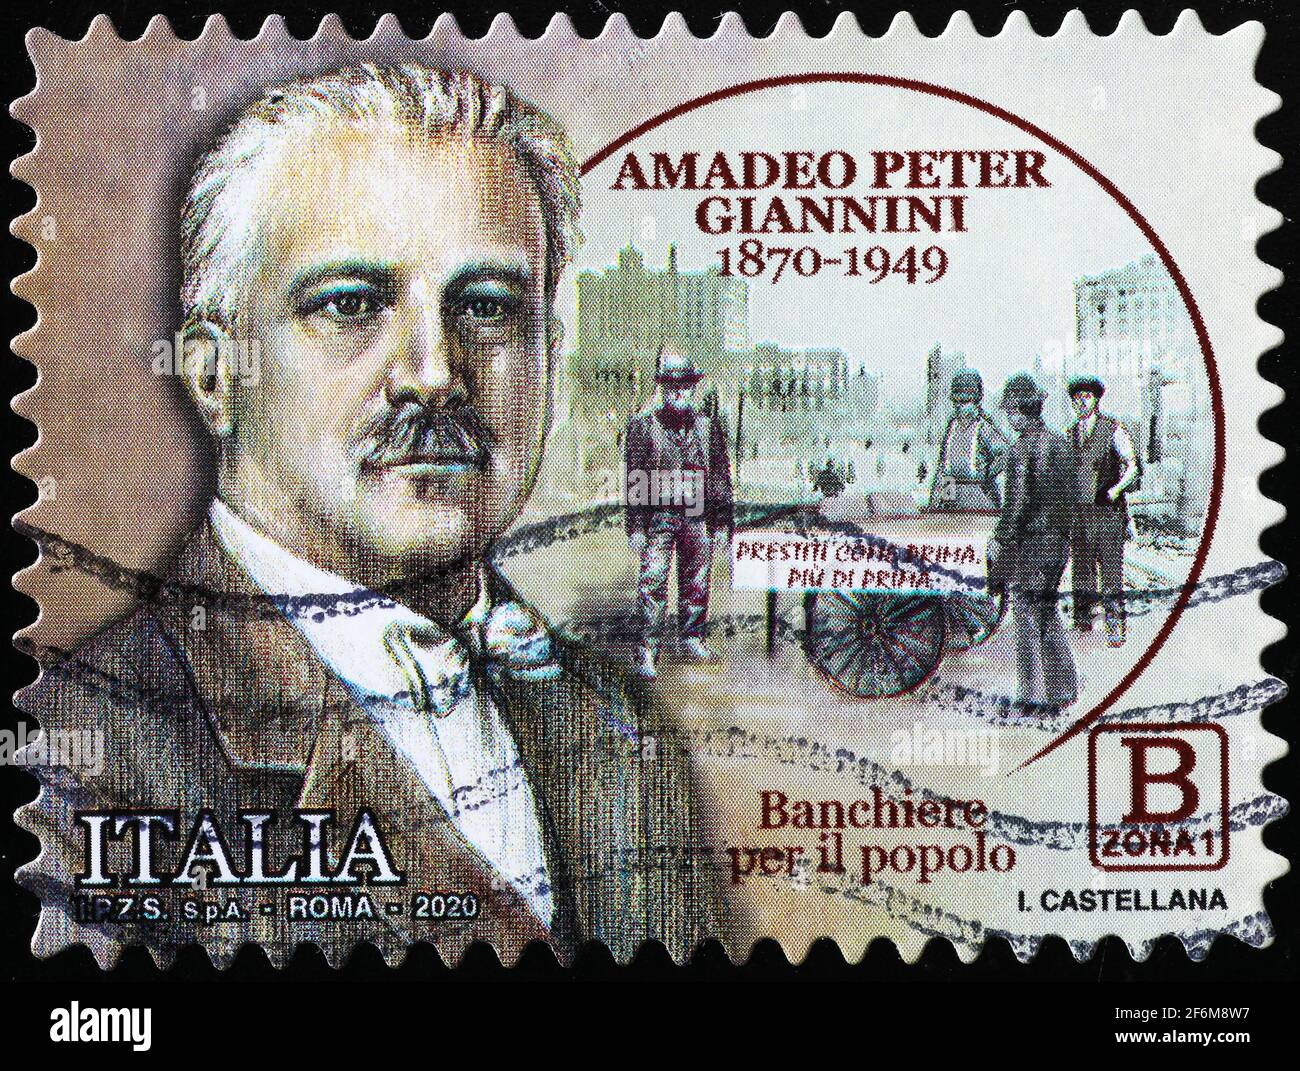 Banker Amadeo Peter Giannini on italian postage stamp Stock Photo